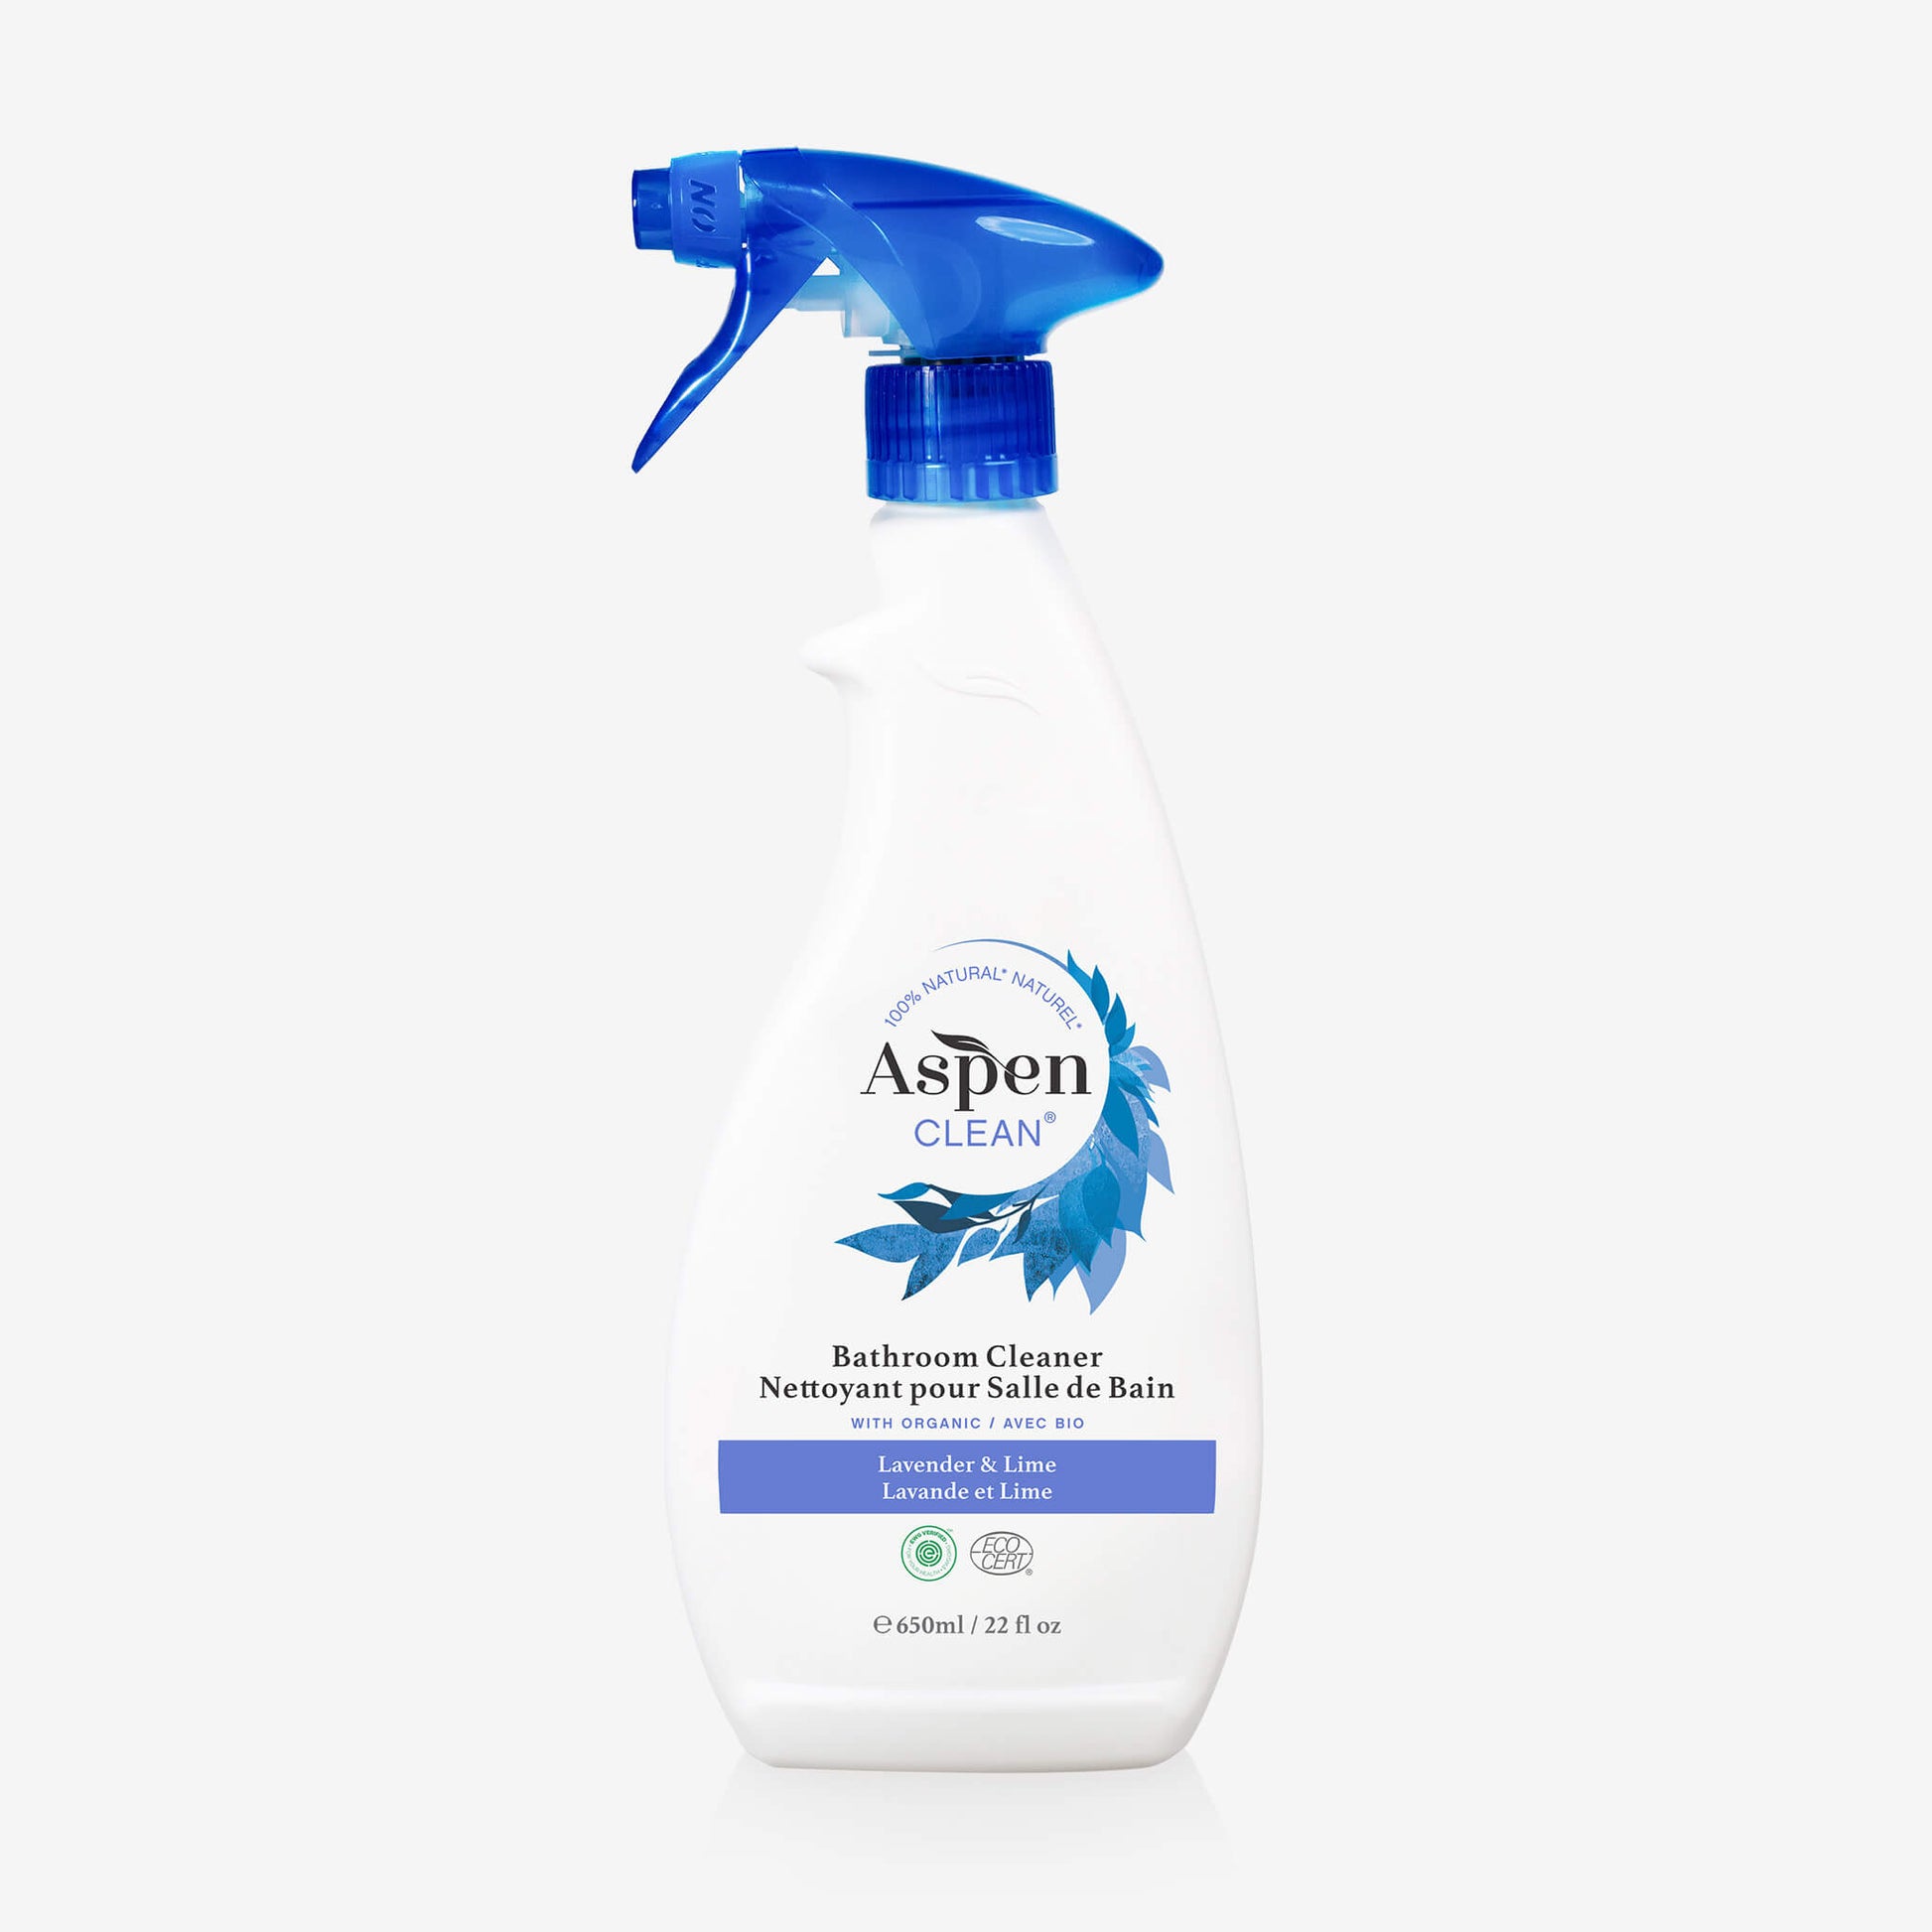 Daily Shower Spray - Fragrance Free – Sensitive Home